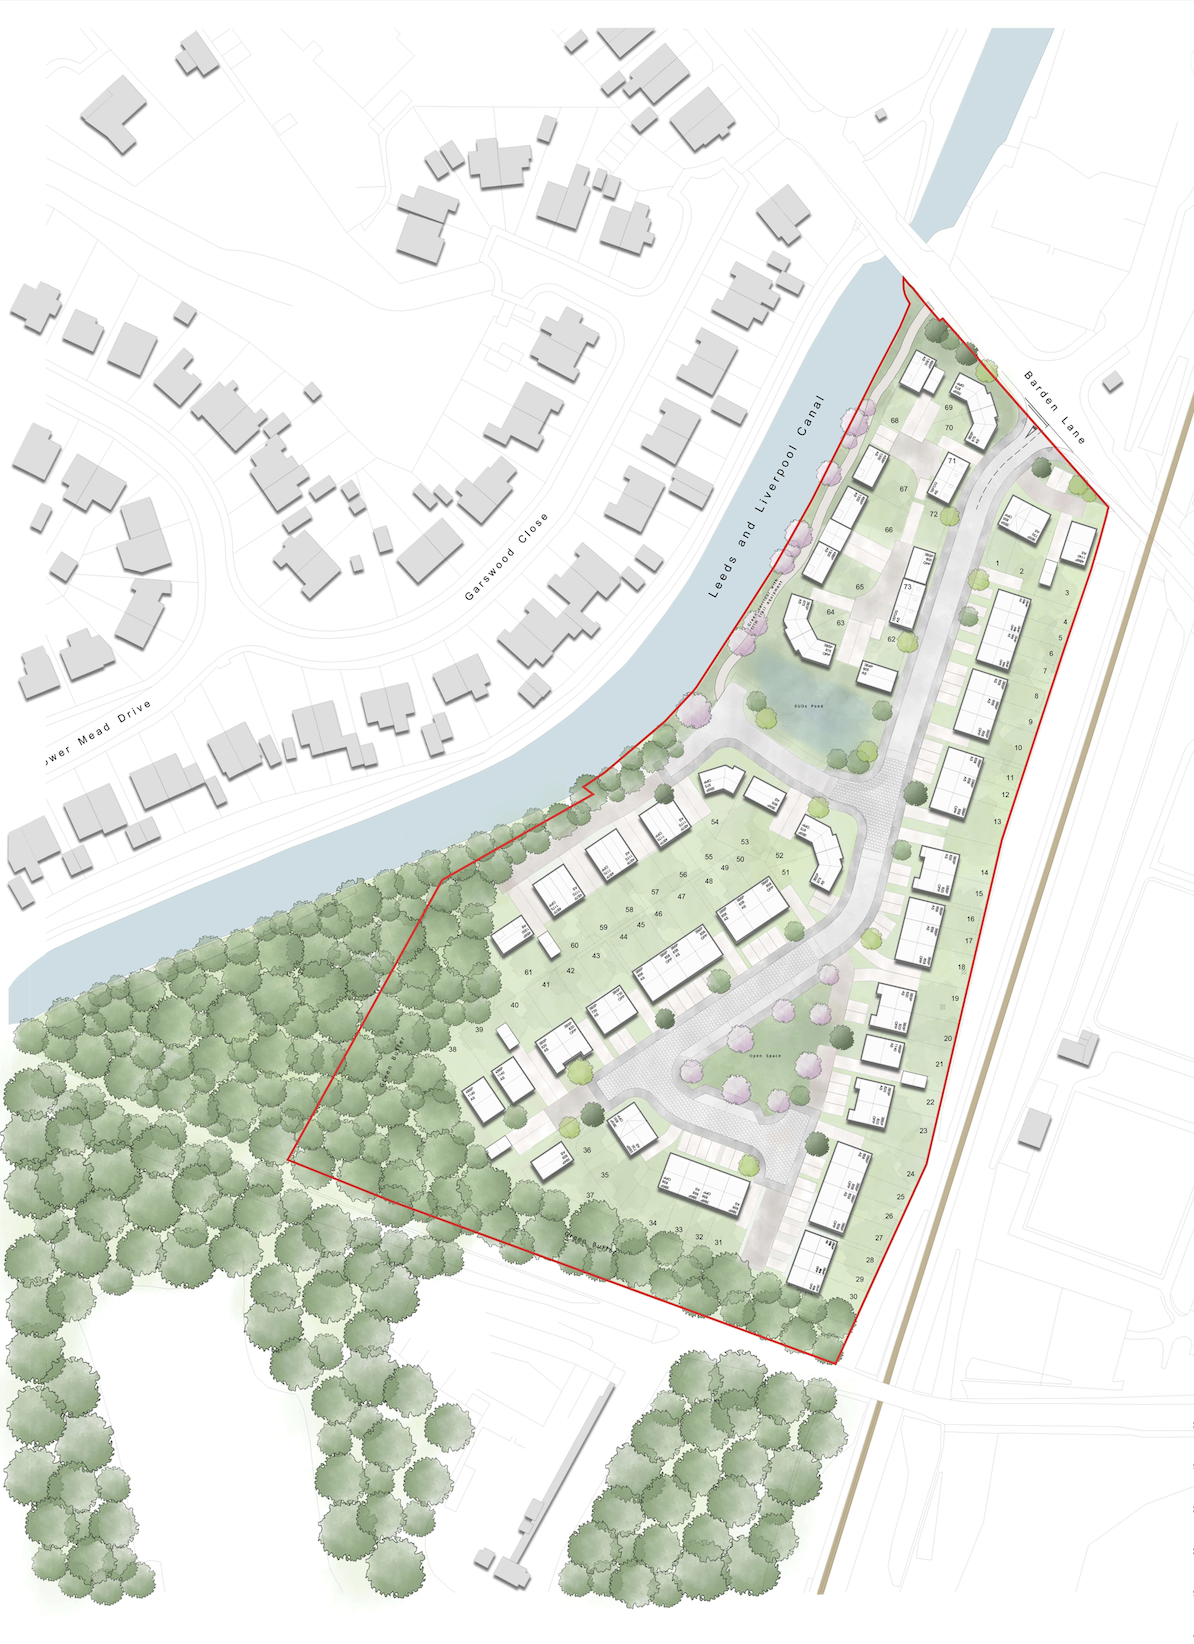 Indicative site plan for Barden Lane residential scheme in Burnley